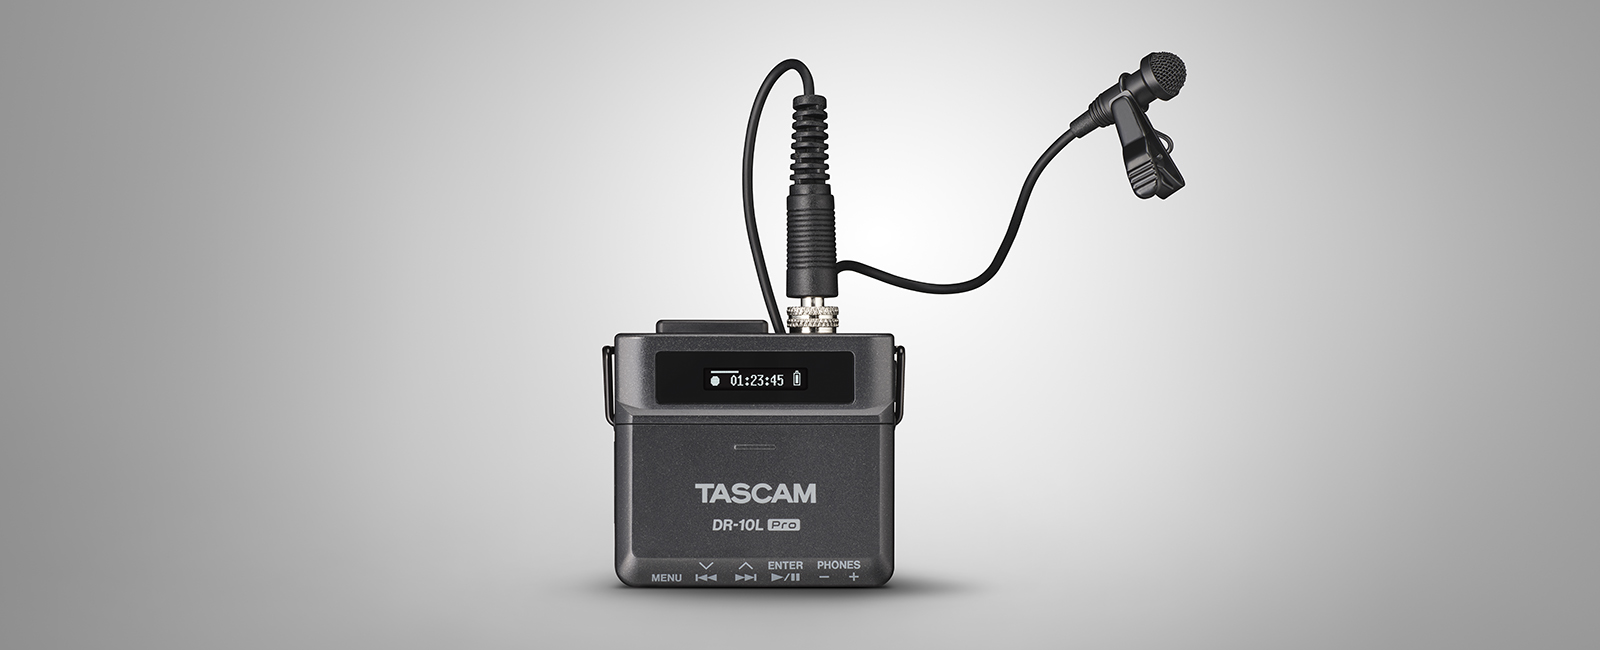 TASCAM Debuts the DR-10L Pro